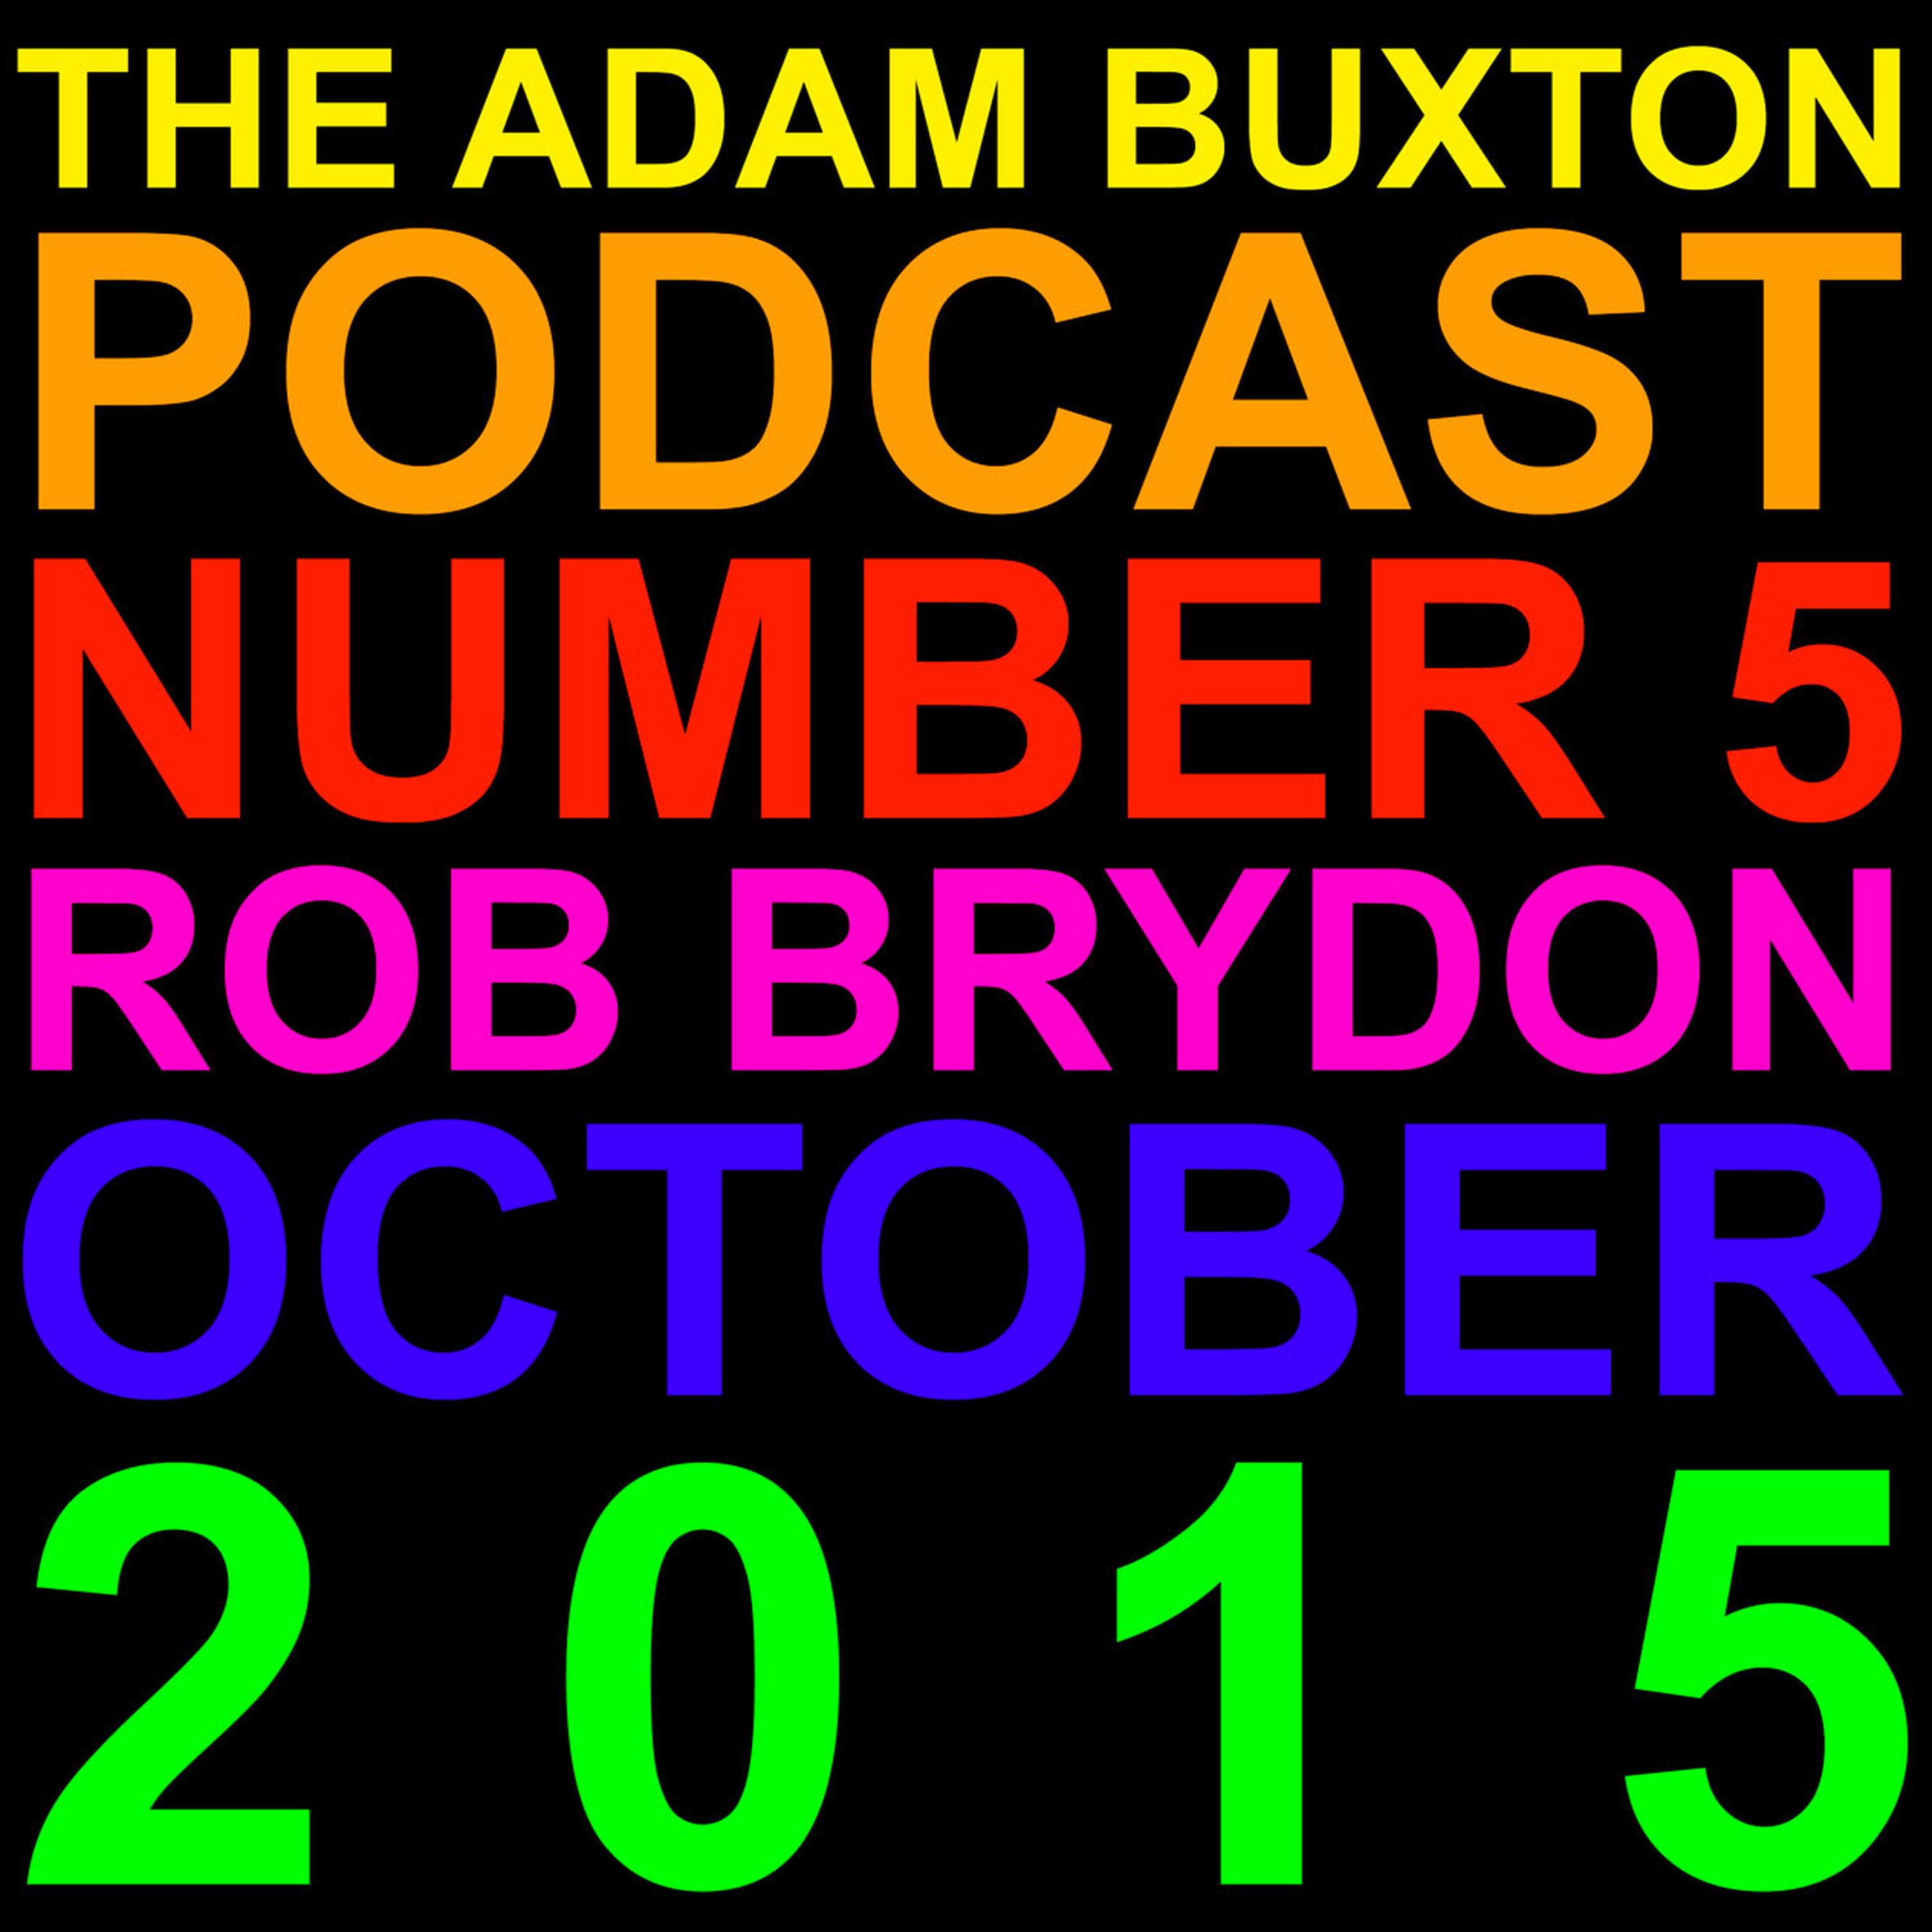 EP.5 - ROB BRYDON